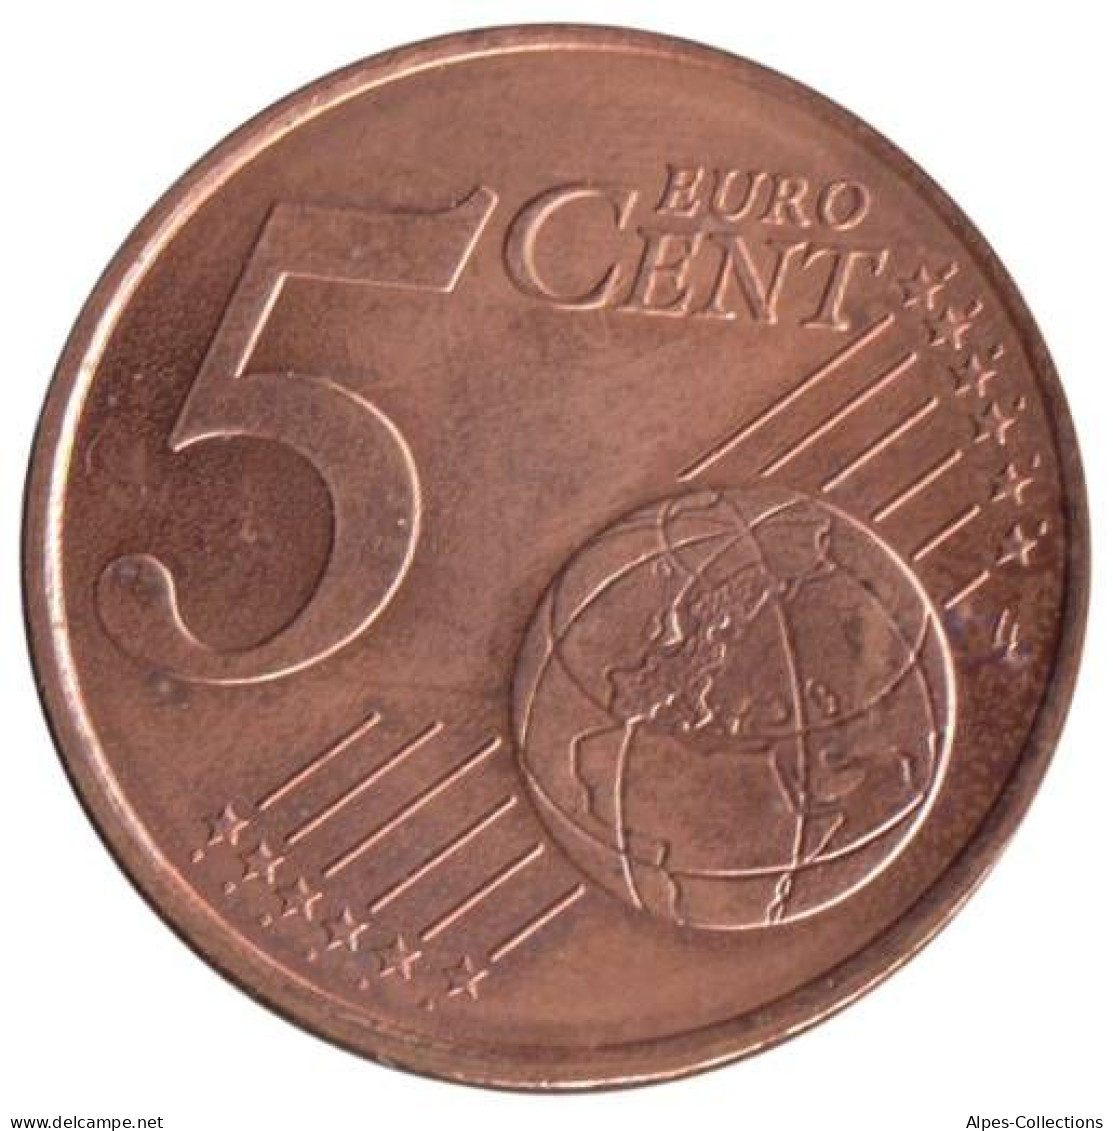 FR00502.1 - FRANCE - 5 Cents - 2002 - Frankrijk